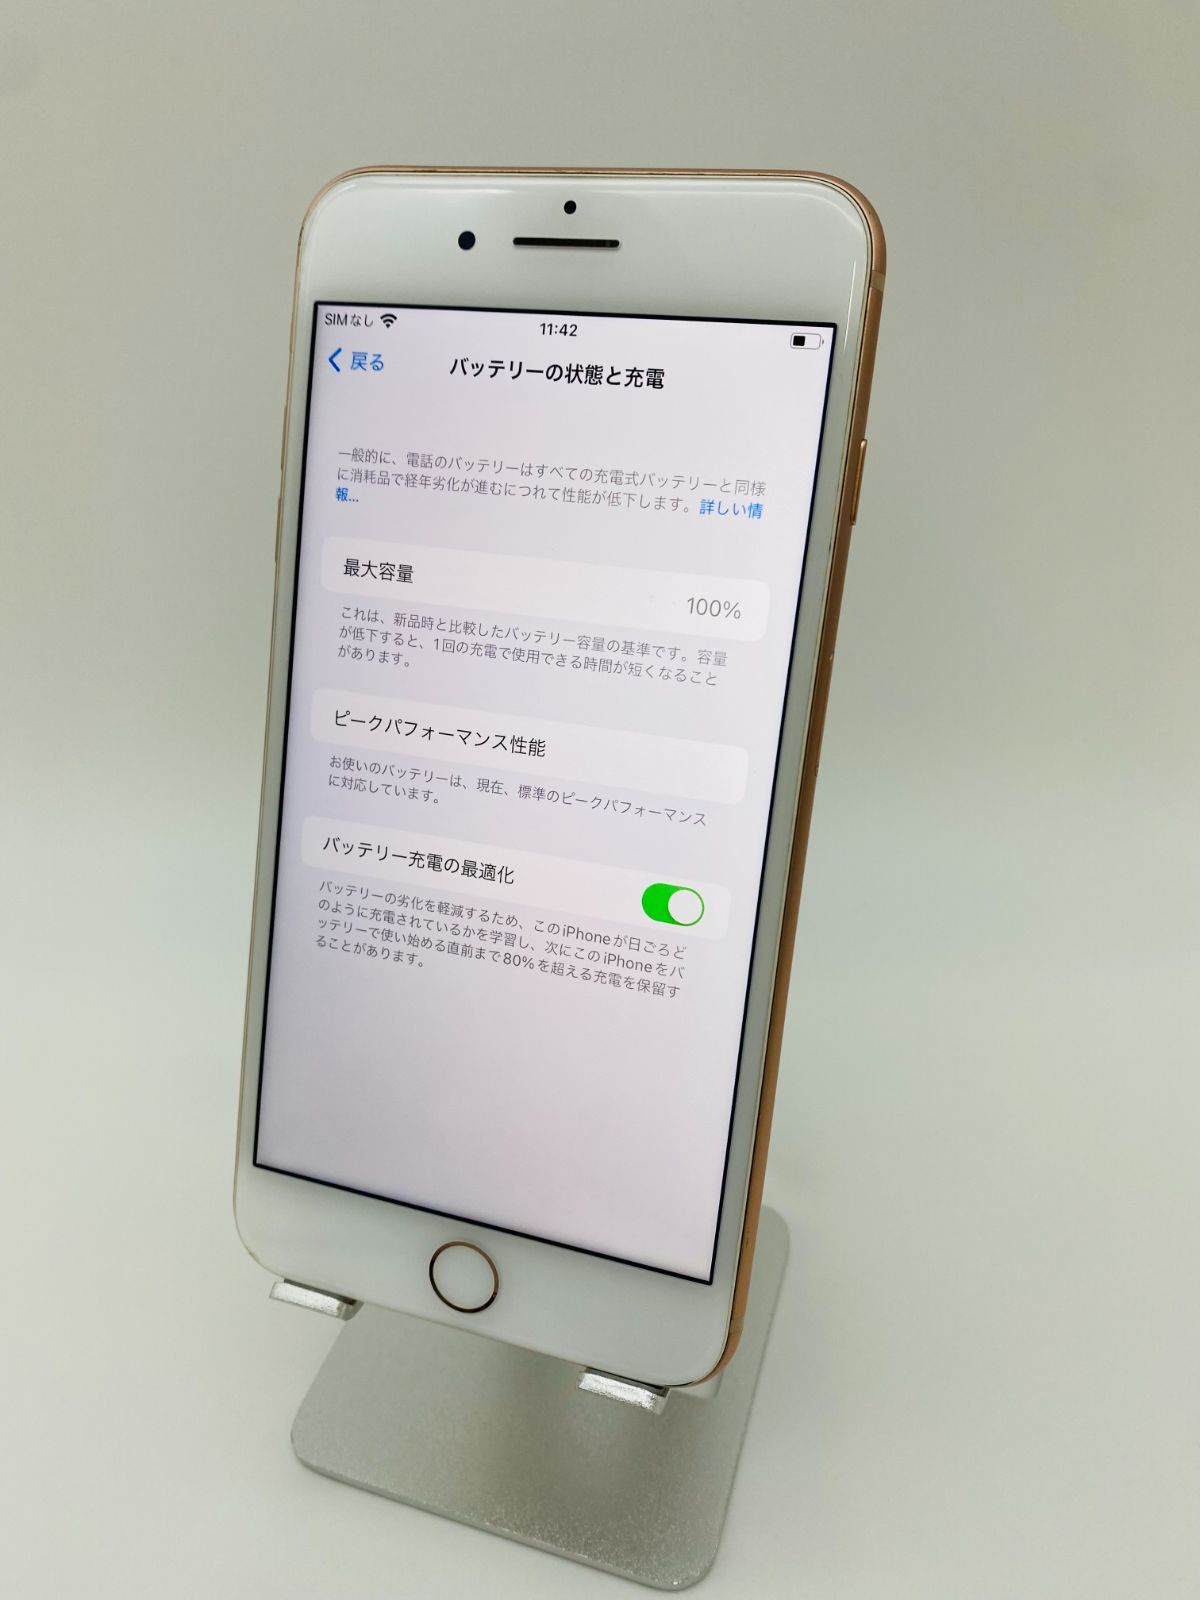 iPhone8 Plus 64GB ゴールド/シムフリー/大容量3400mAh新品バッテリー 